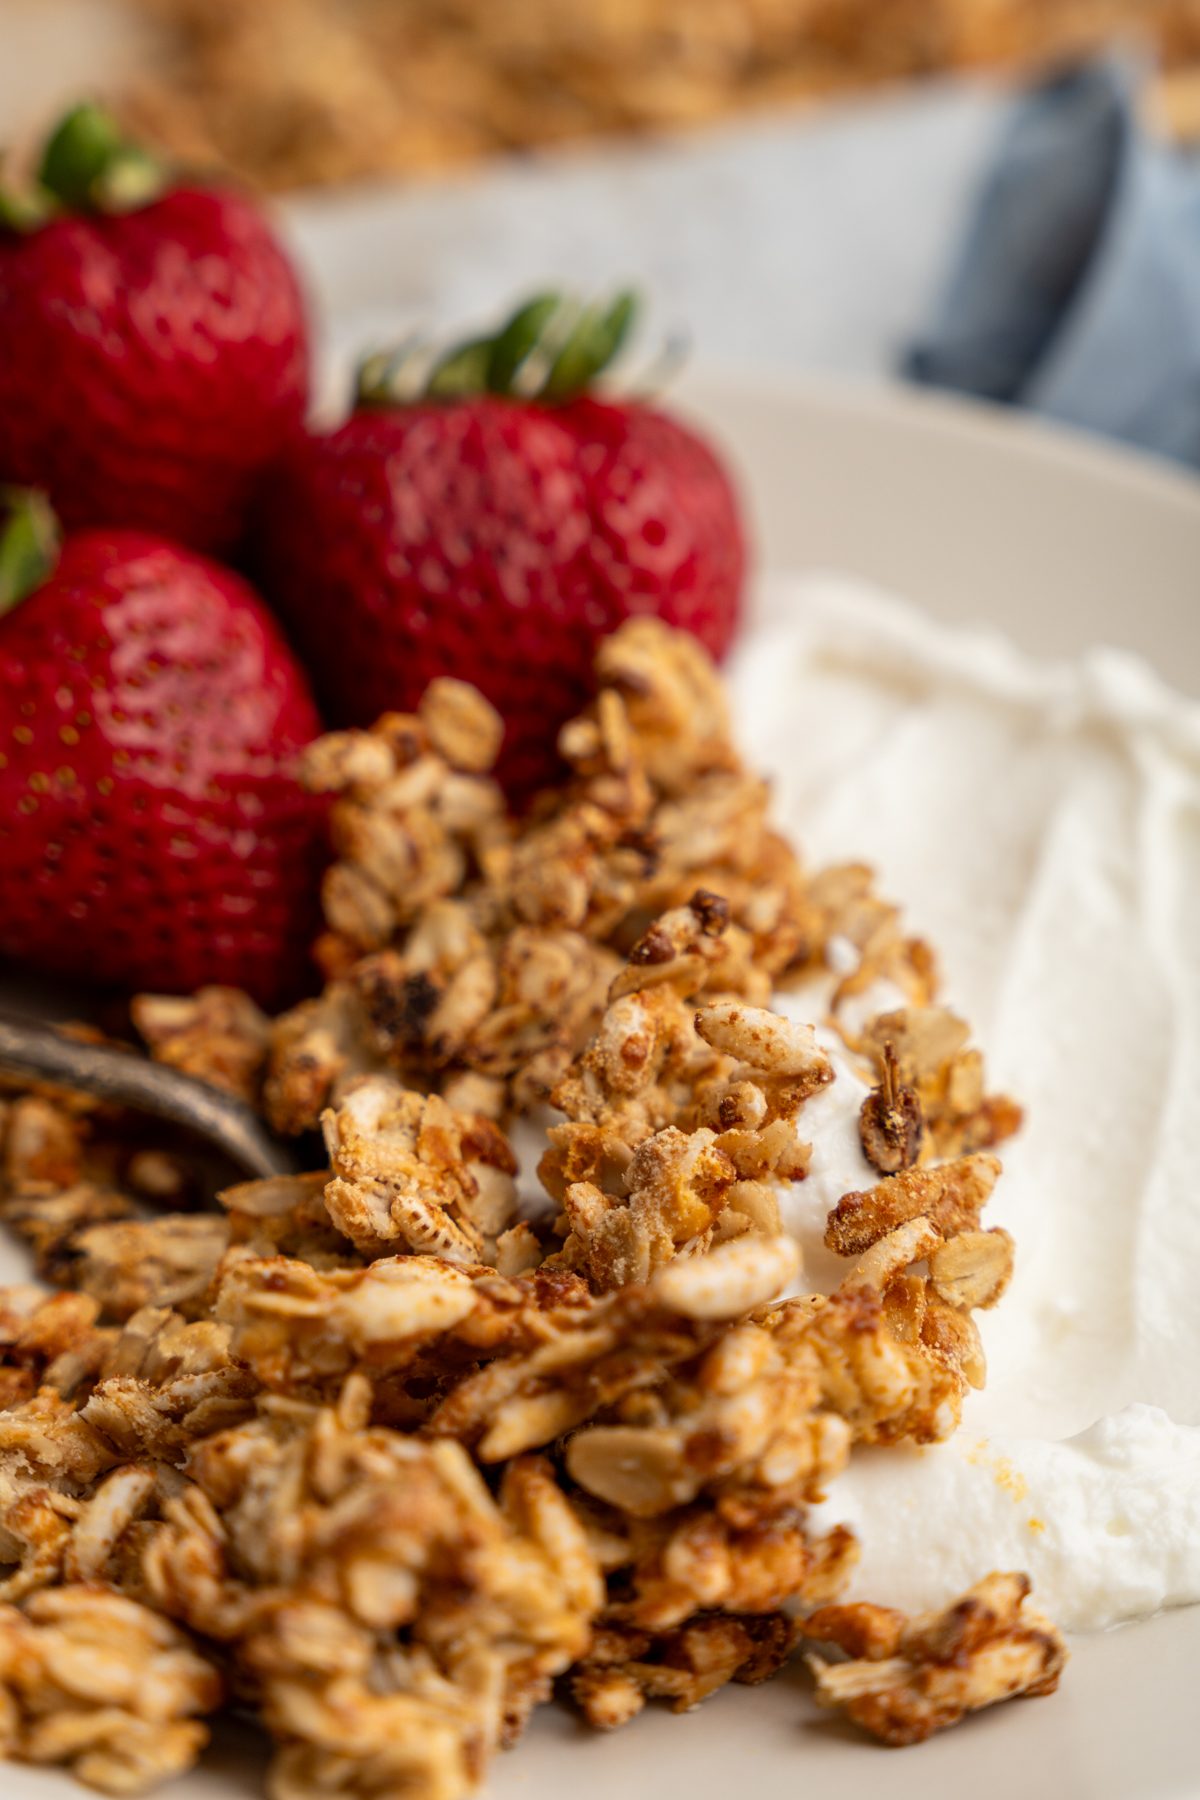 Vanilla granola on a plate with yogurt and strawberries.